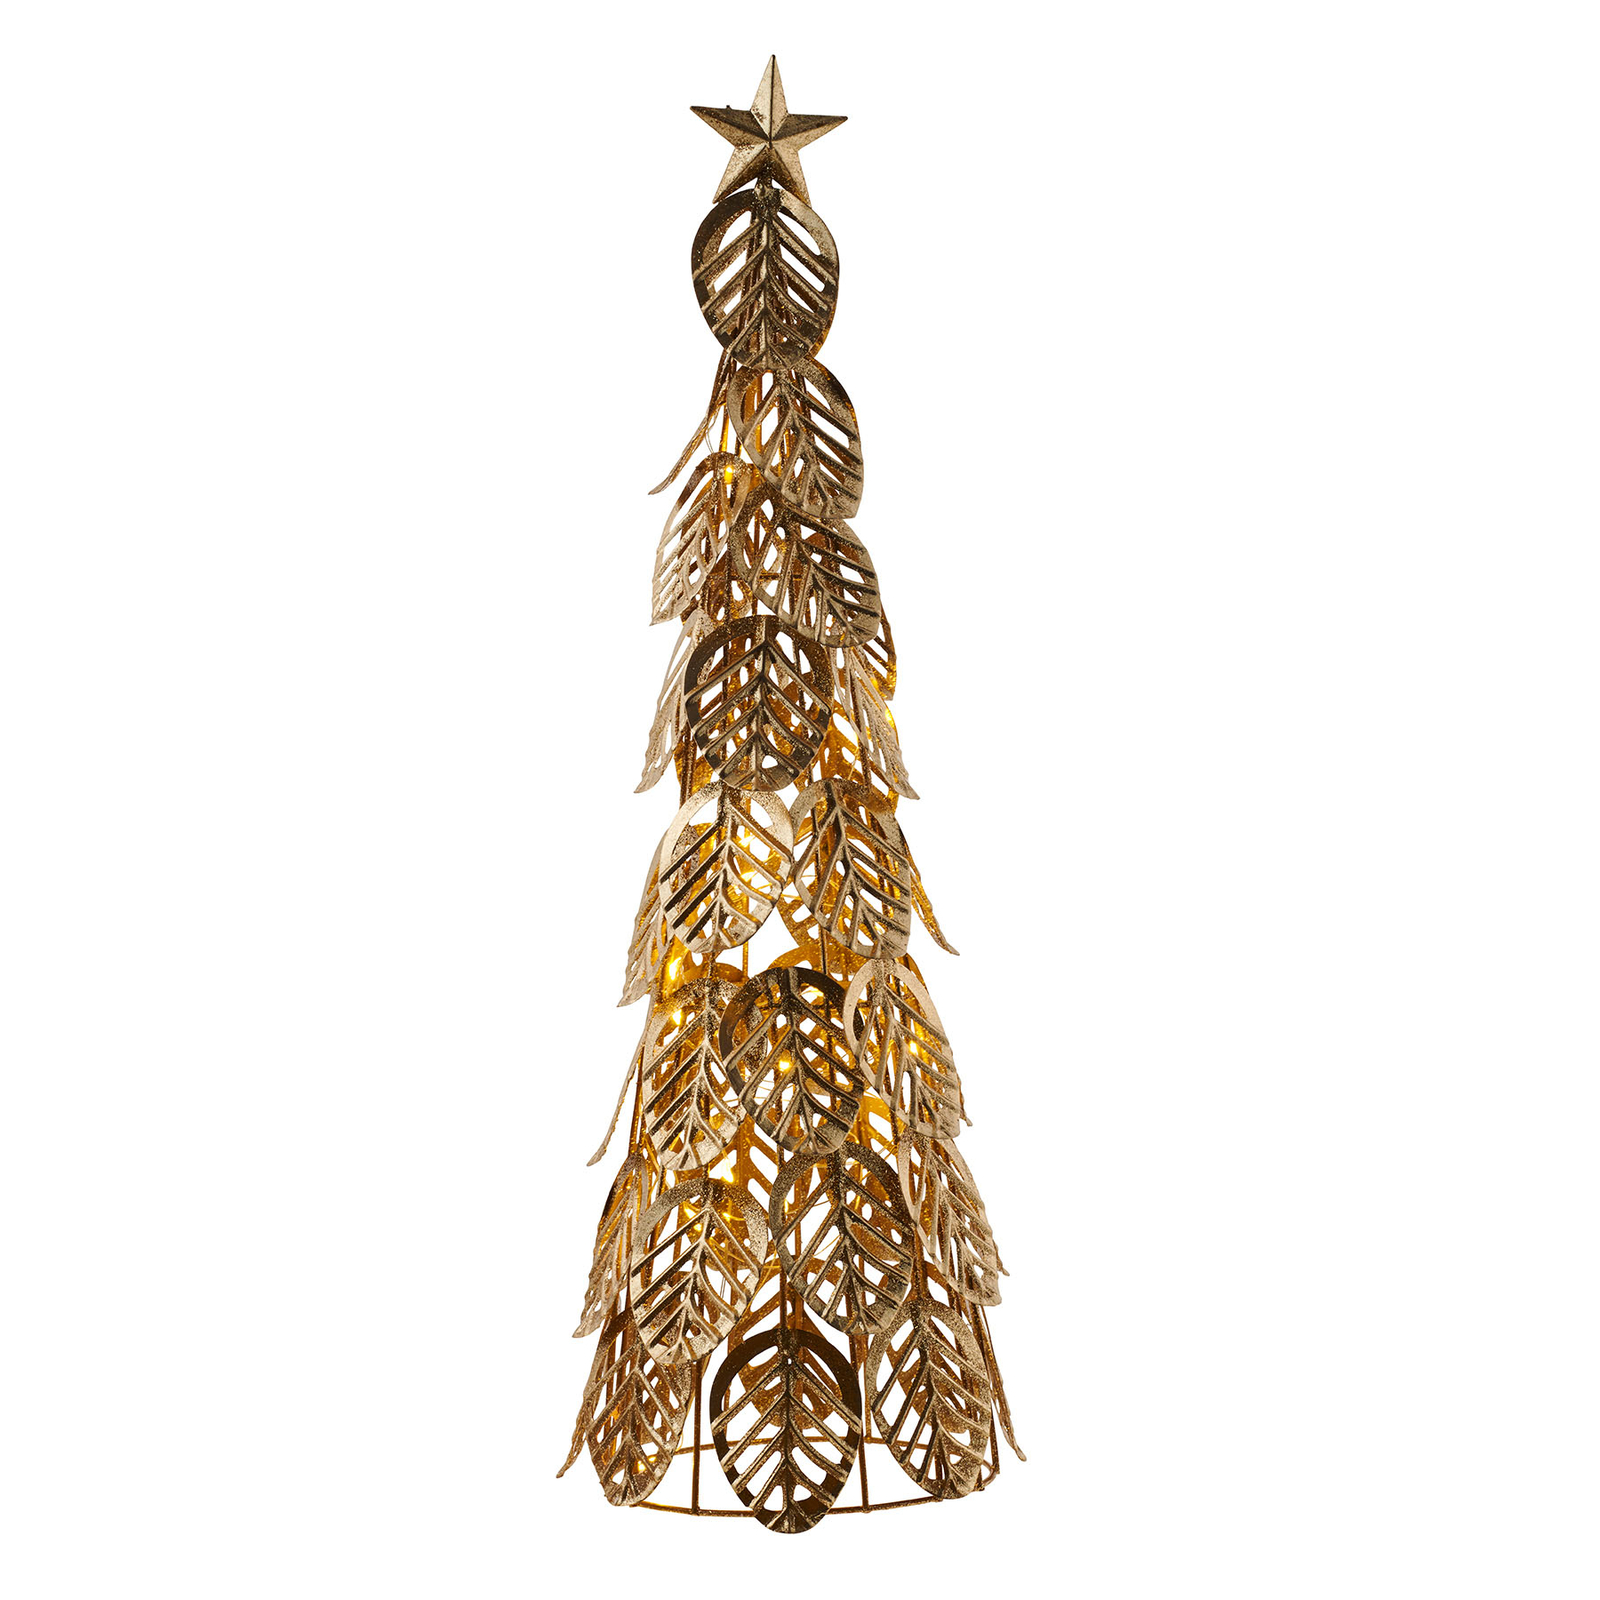 LED decorative tree Kirstine, gold, height 43 cm